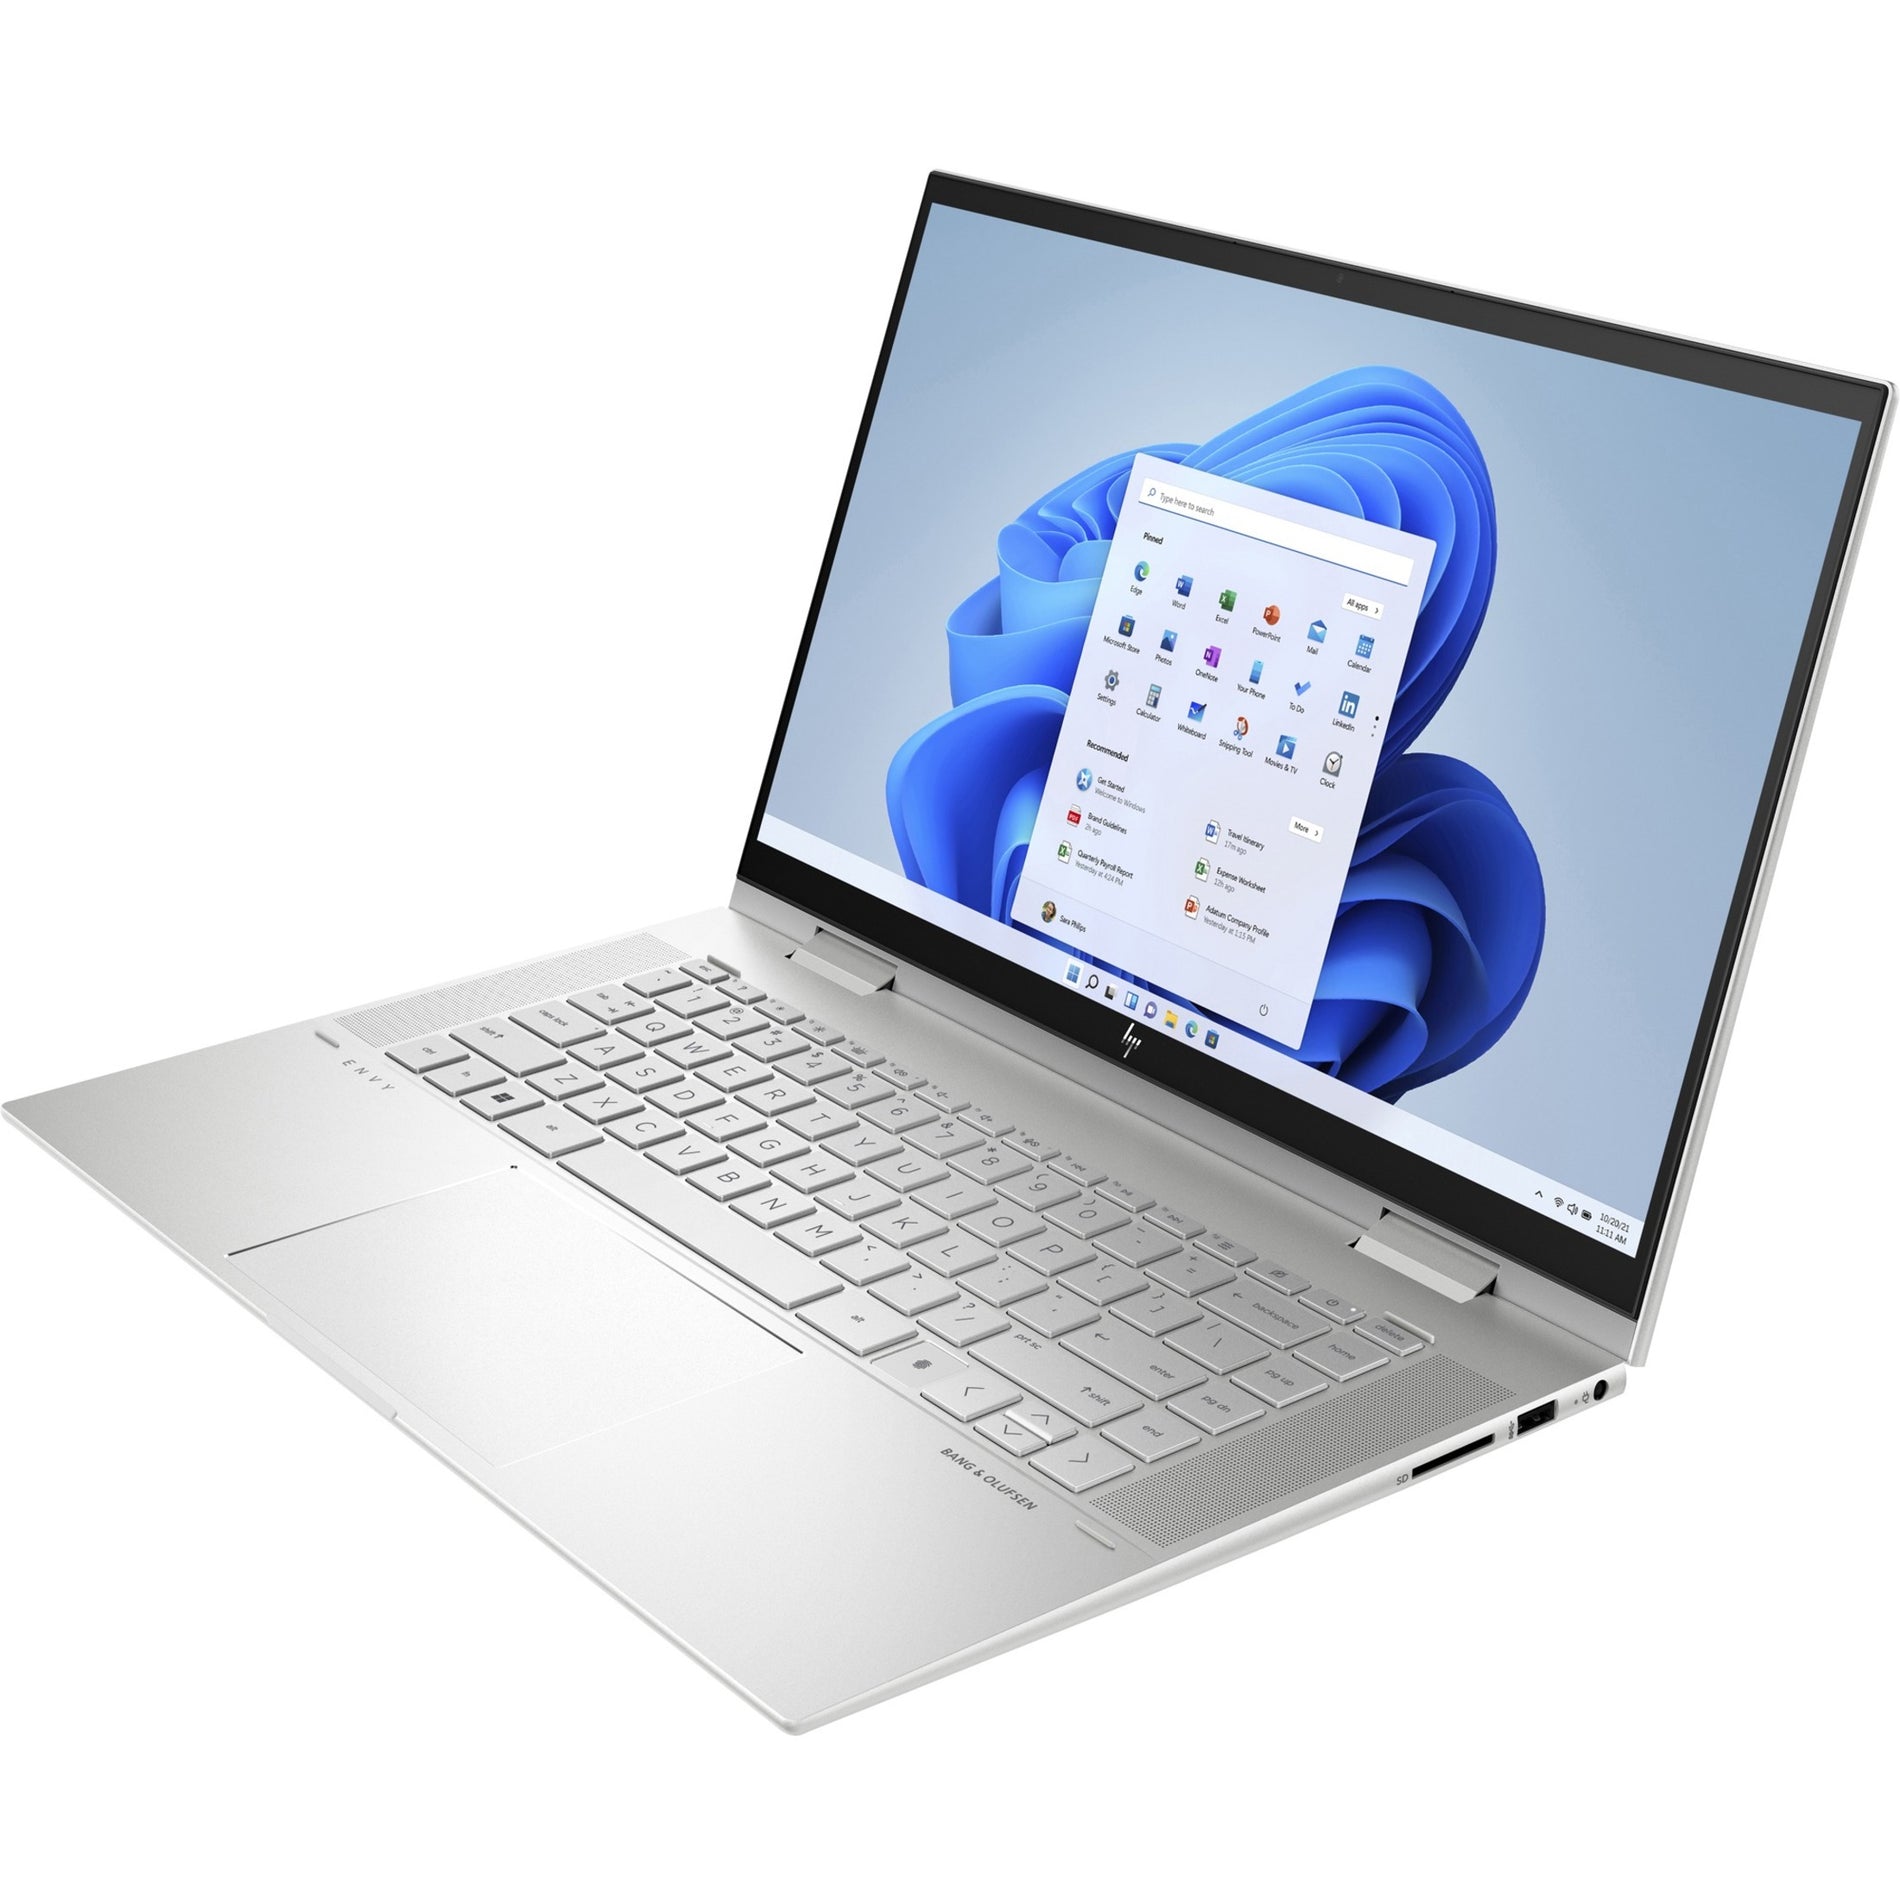 HP ENVY x360 15-es2001nr 15.6" Touchscreen Convertible 2 in 1 Notebook, Full HD, Intel Core i5 12th Gen, 8GB RAM, 512GB SSD, Natural Silver Aluminum